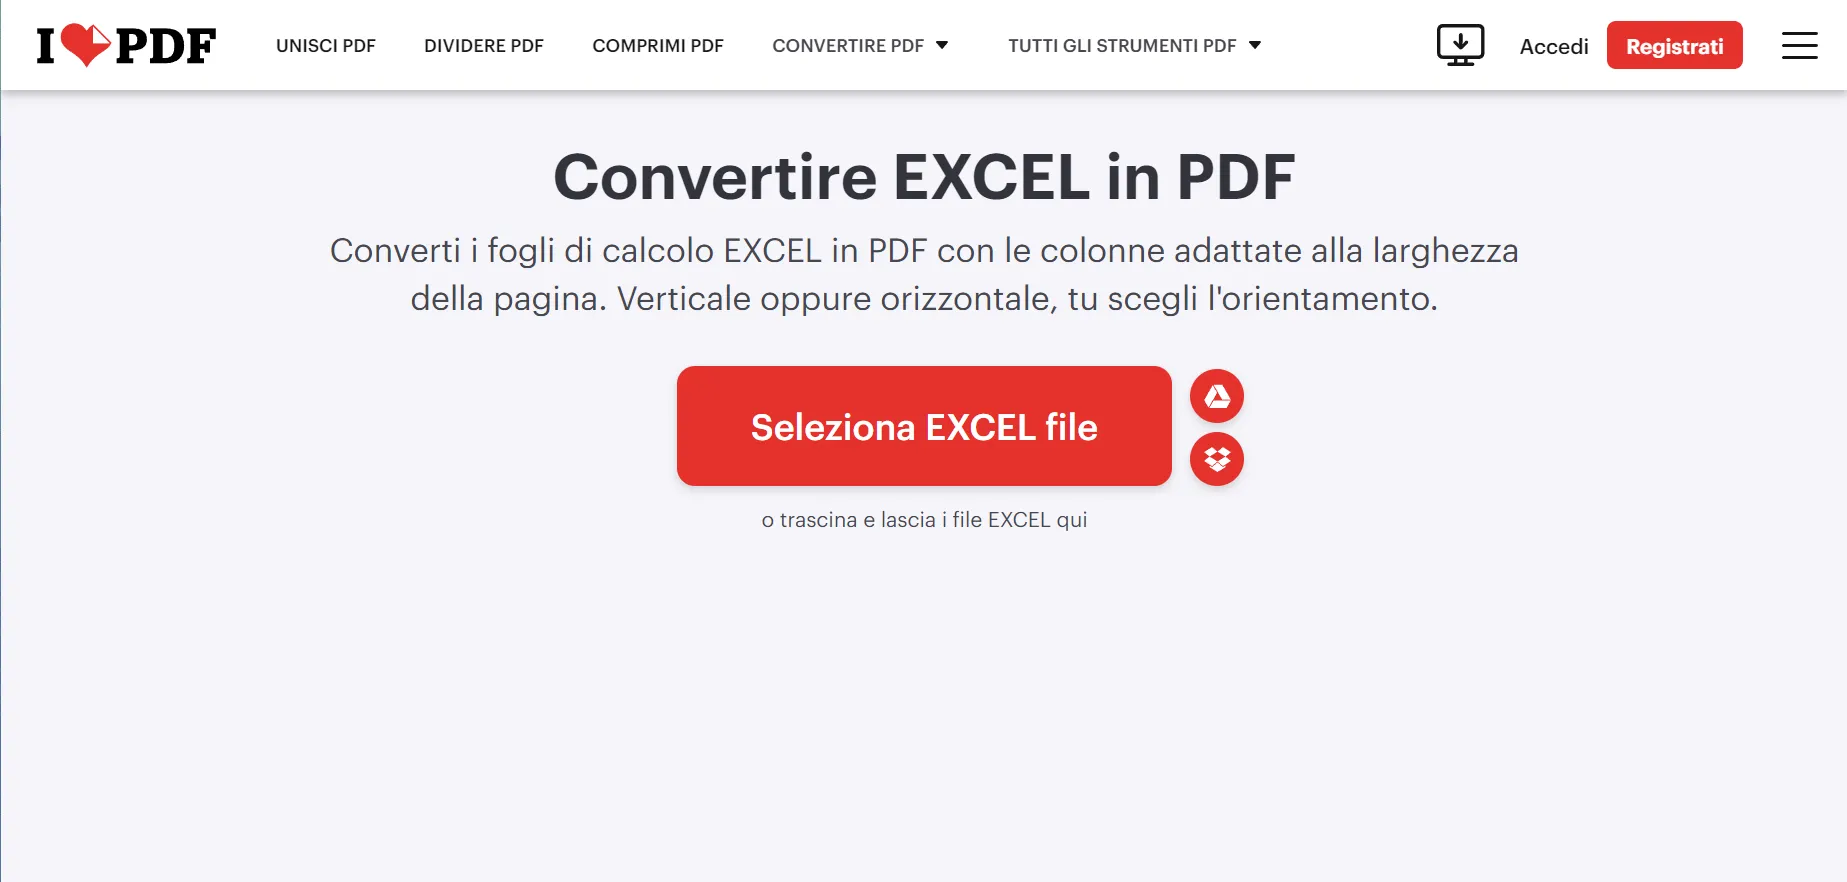 Convertire Excel in PDF online con iLovePDF